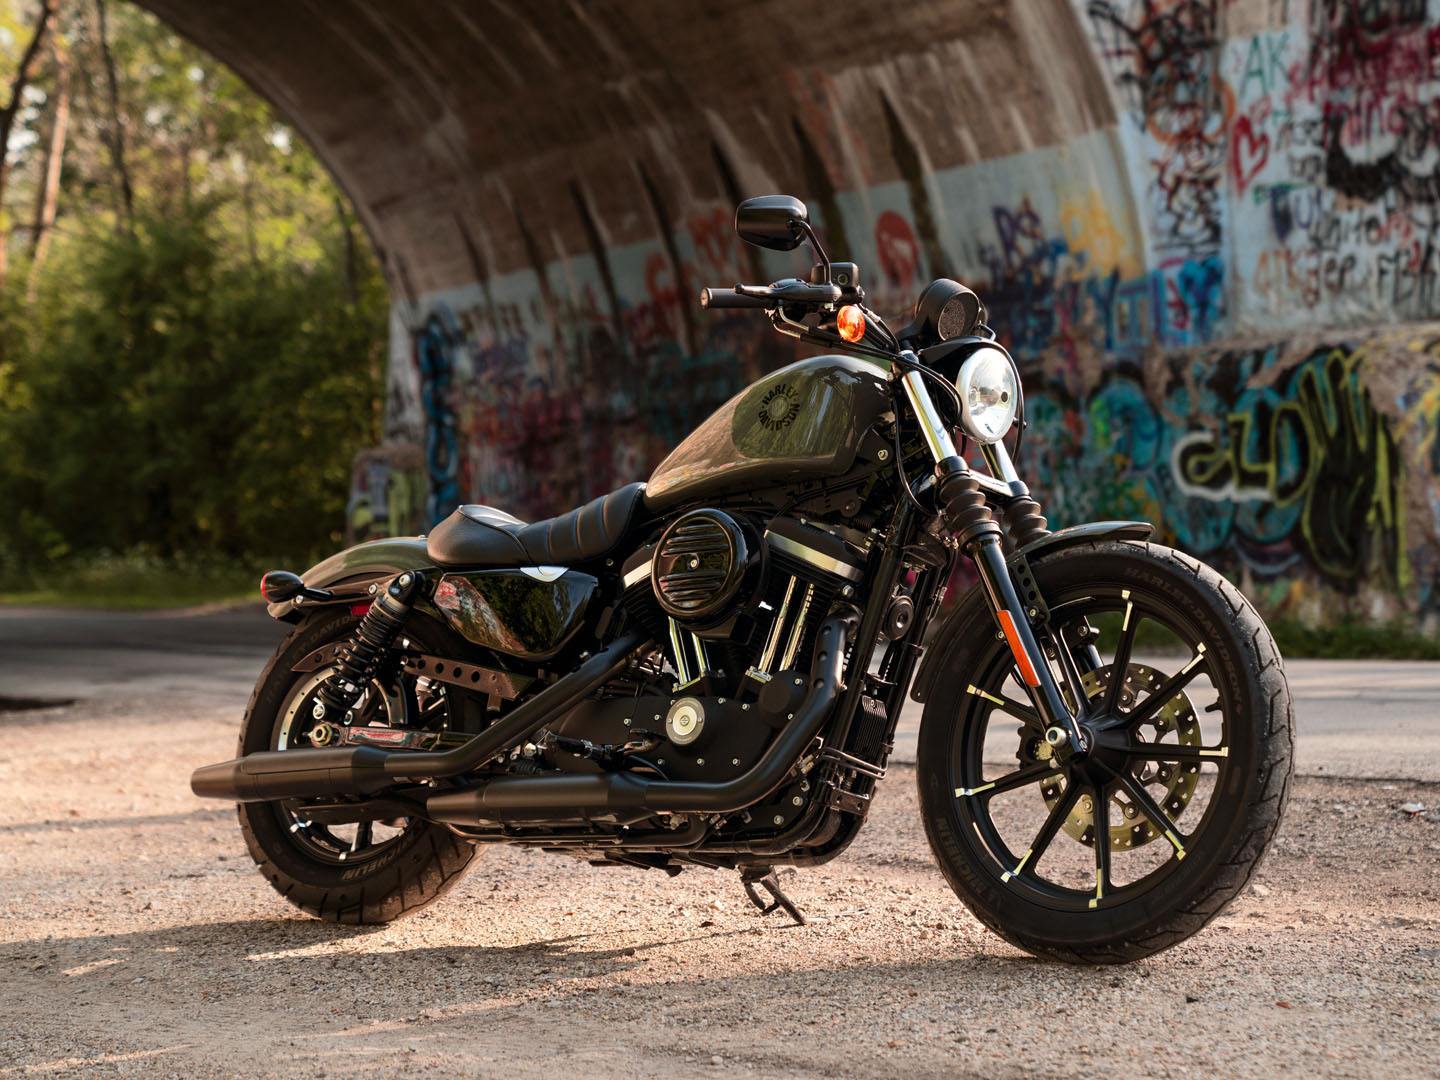 2021 Harley-Davidson Iron 883™ in Fredericksburg, Virginia - Photo 7